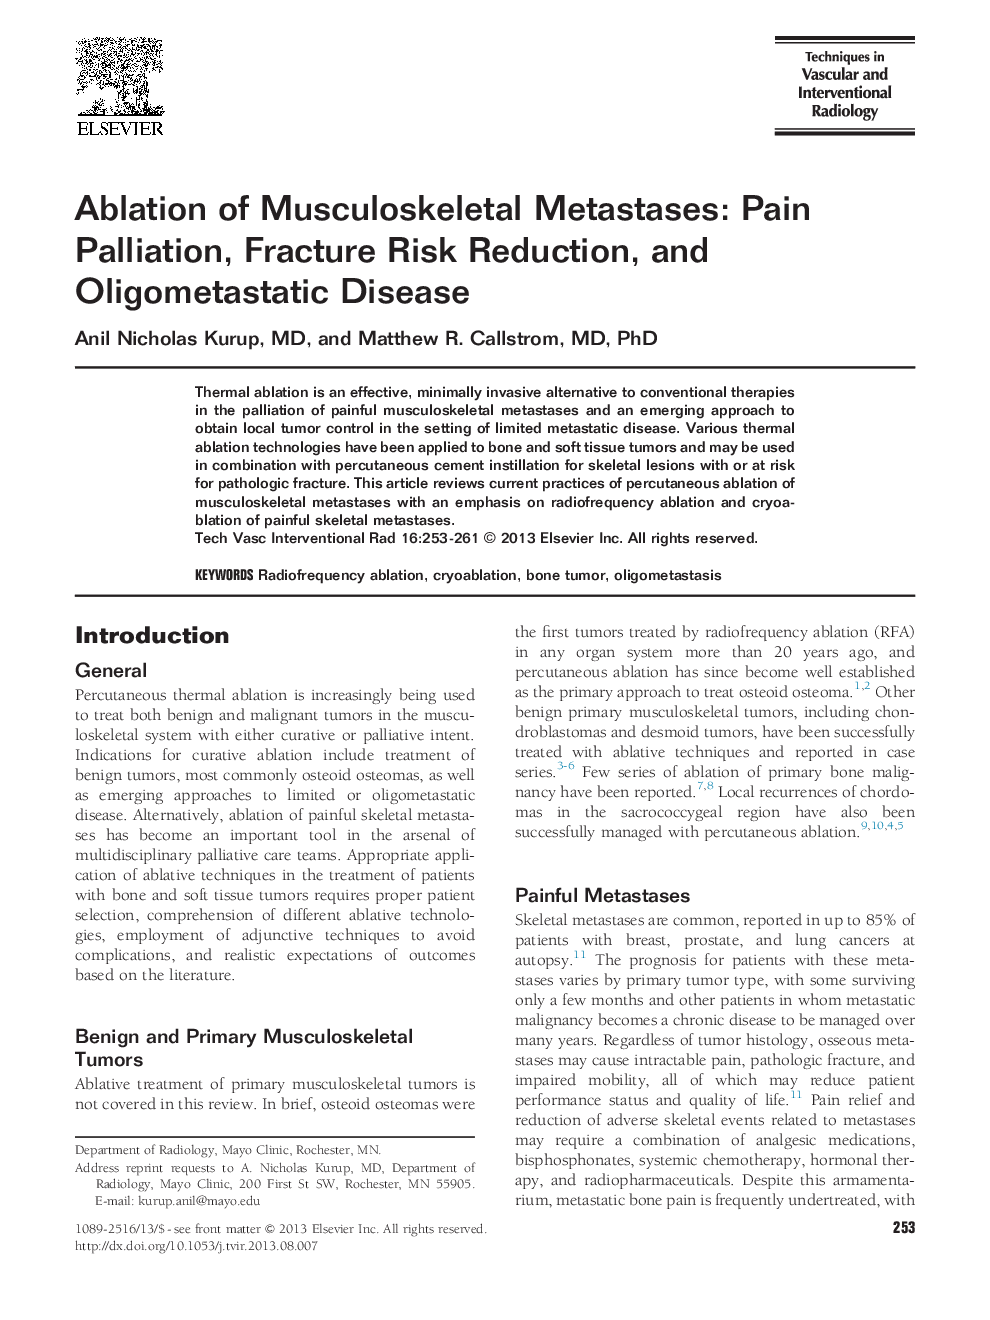 Ablation of Musculoskeletal Metastases: Pain Palliation, Fracture Risk Reduction, and Oligometastatic Disease